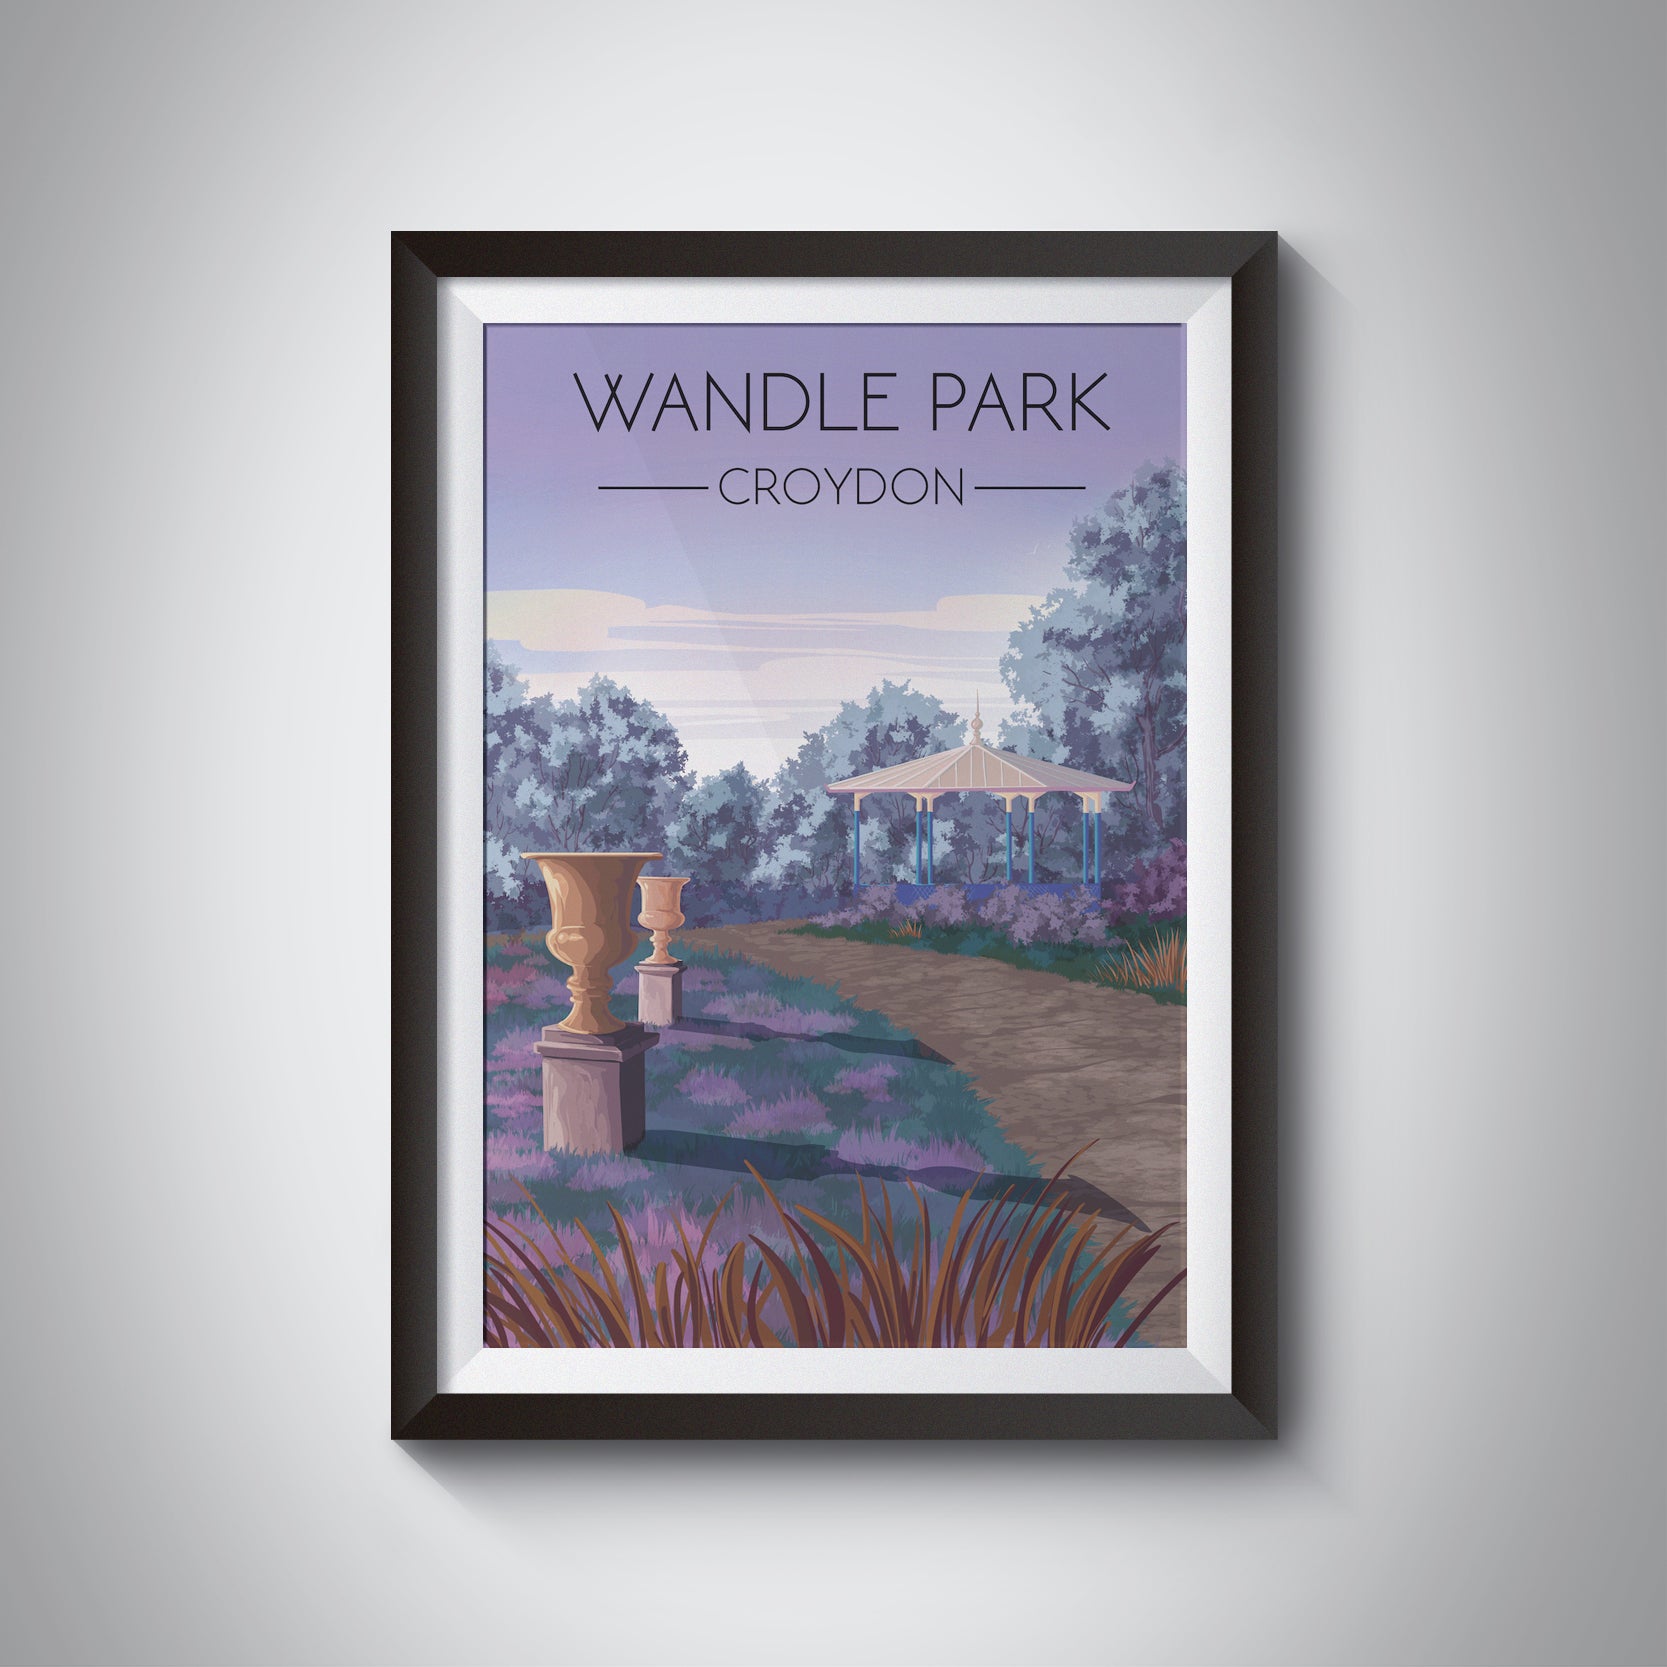 Wandle Park Croydon Travel Poster